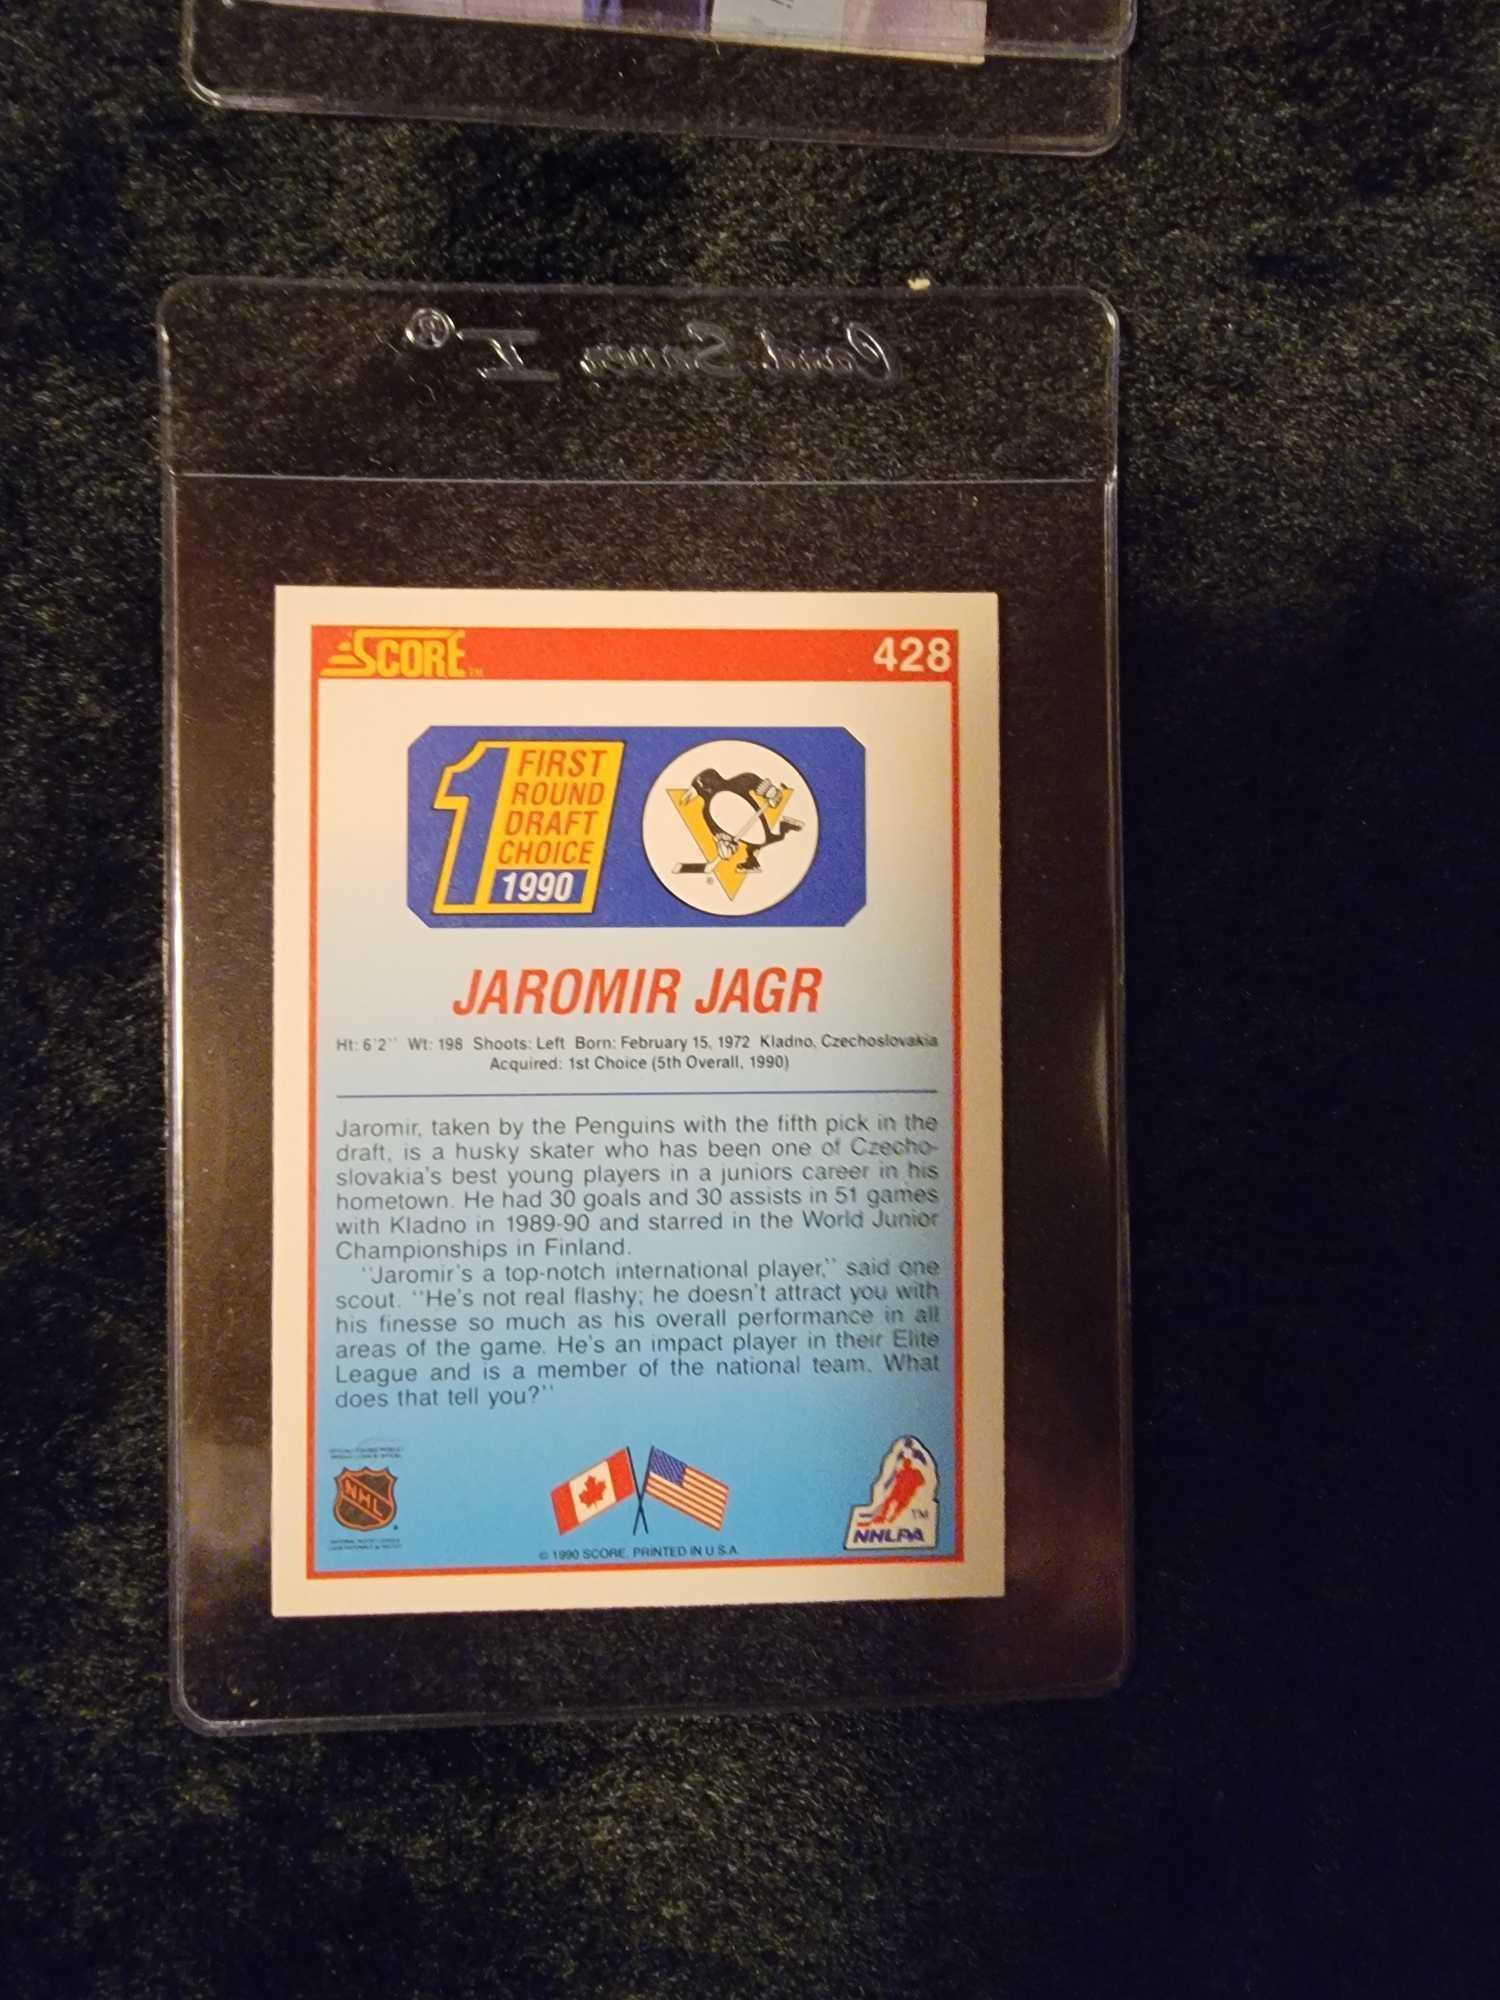 Jaromir Jagr rookie card plus lot 11 cards RC hockey UD